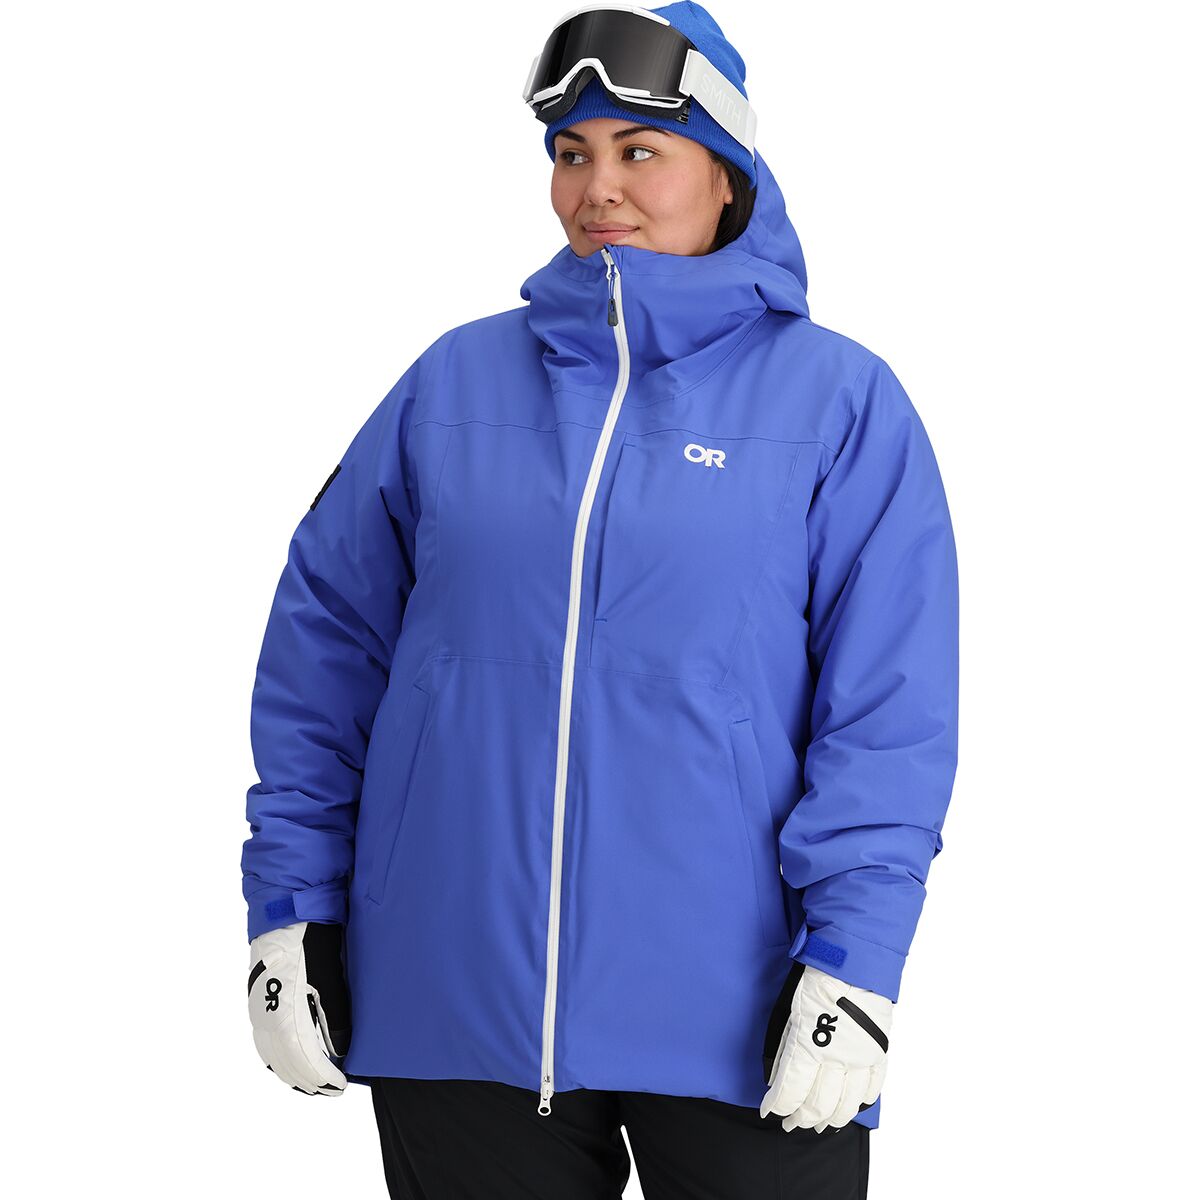 Outdoor Research Snowcrew Plus Jacket - Women's